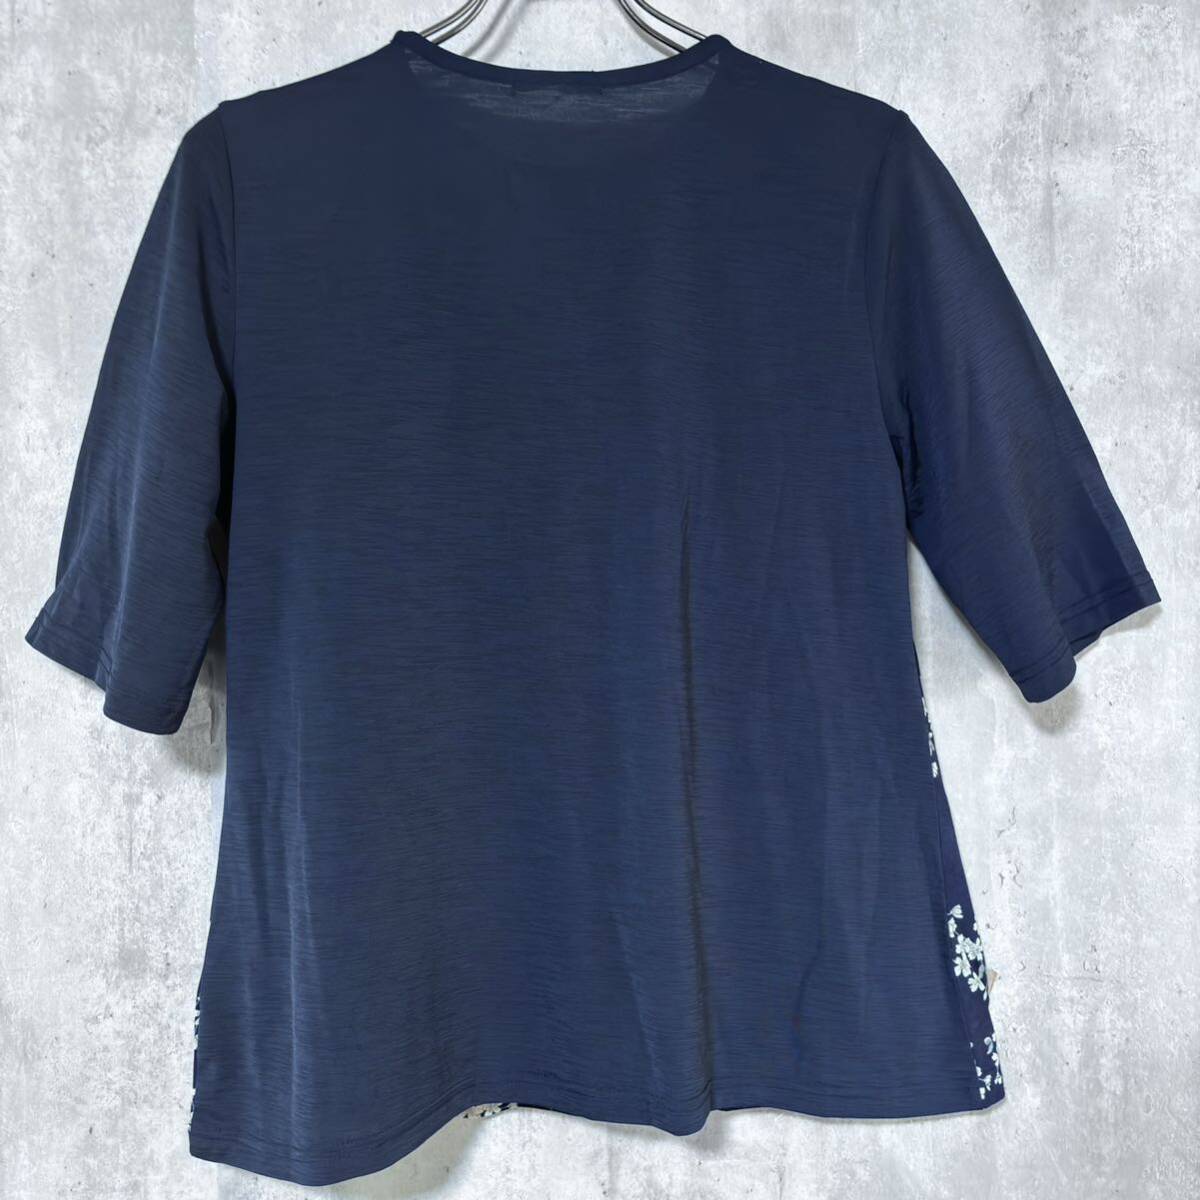 FIRST light ground T-shirt floral print navy blue M from L